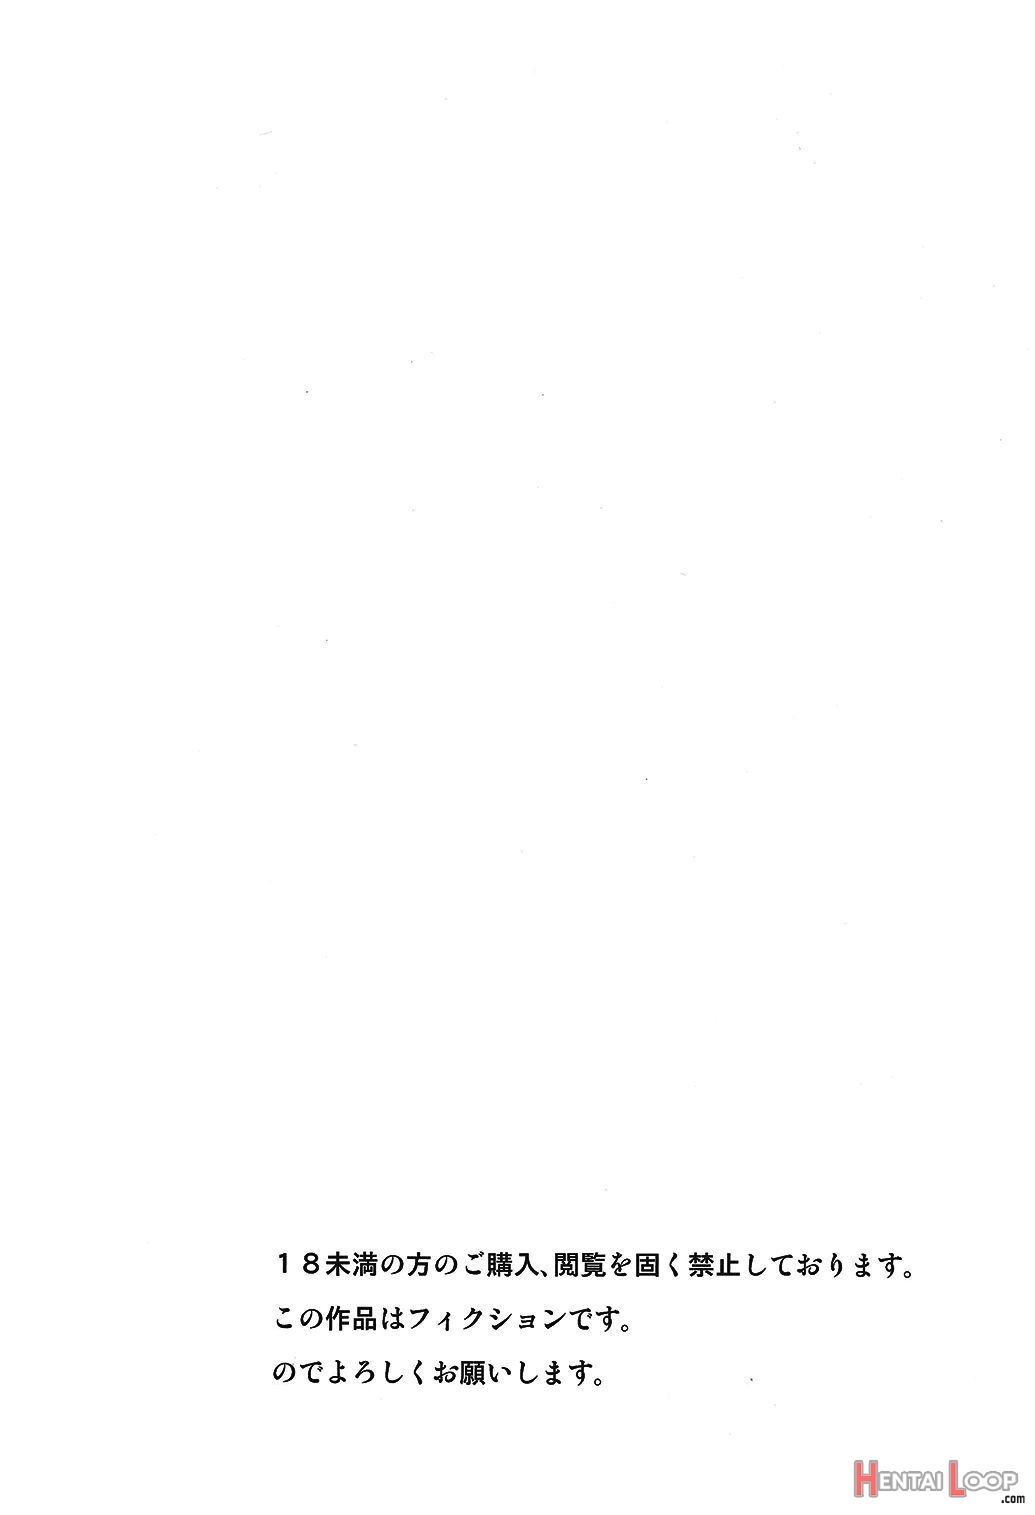 Nikuman Chokusou – Colorized page 3